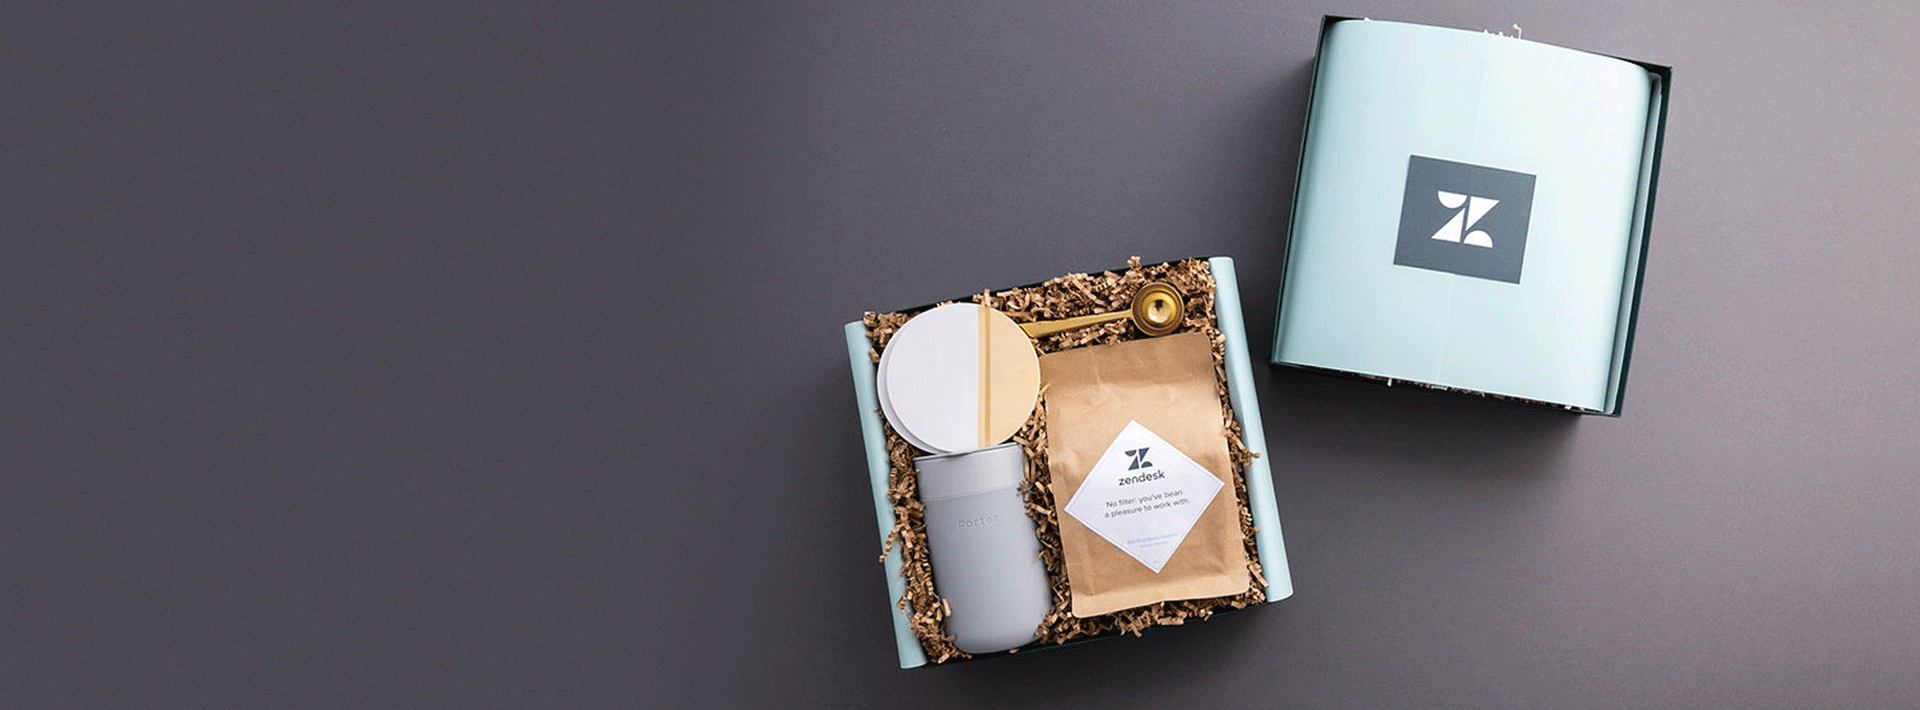 zendesk branded coffe bags in a coffee mini gift box